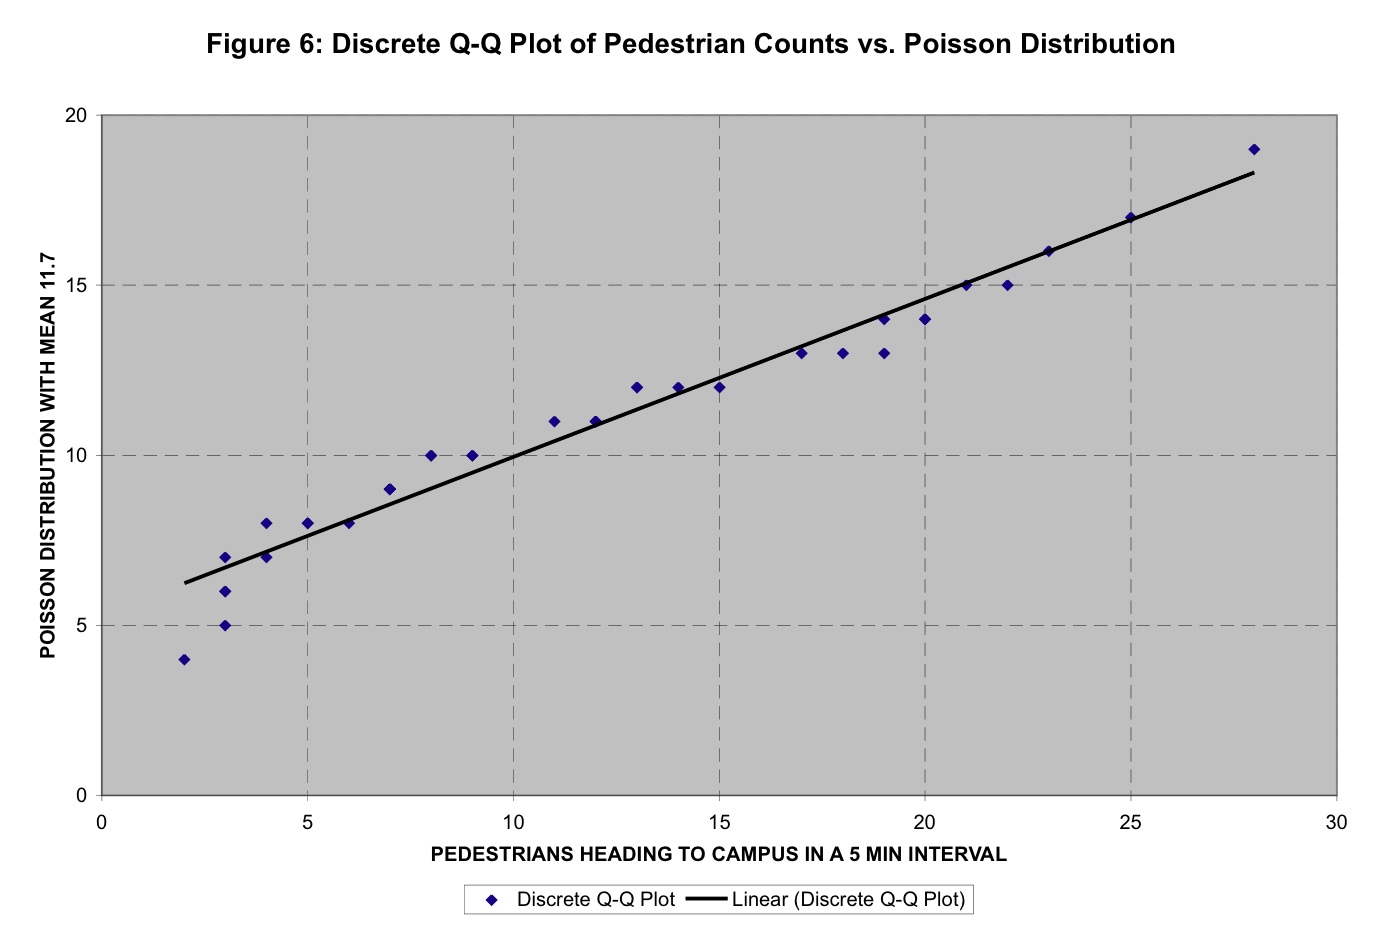 Q-Q Plot closely follows a linear trend line